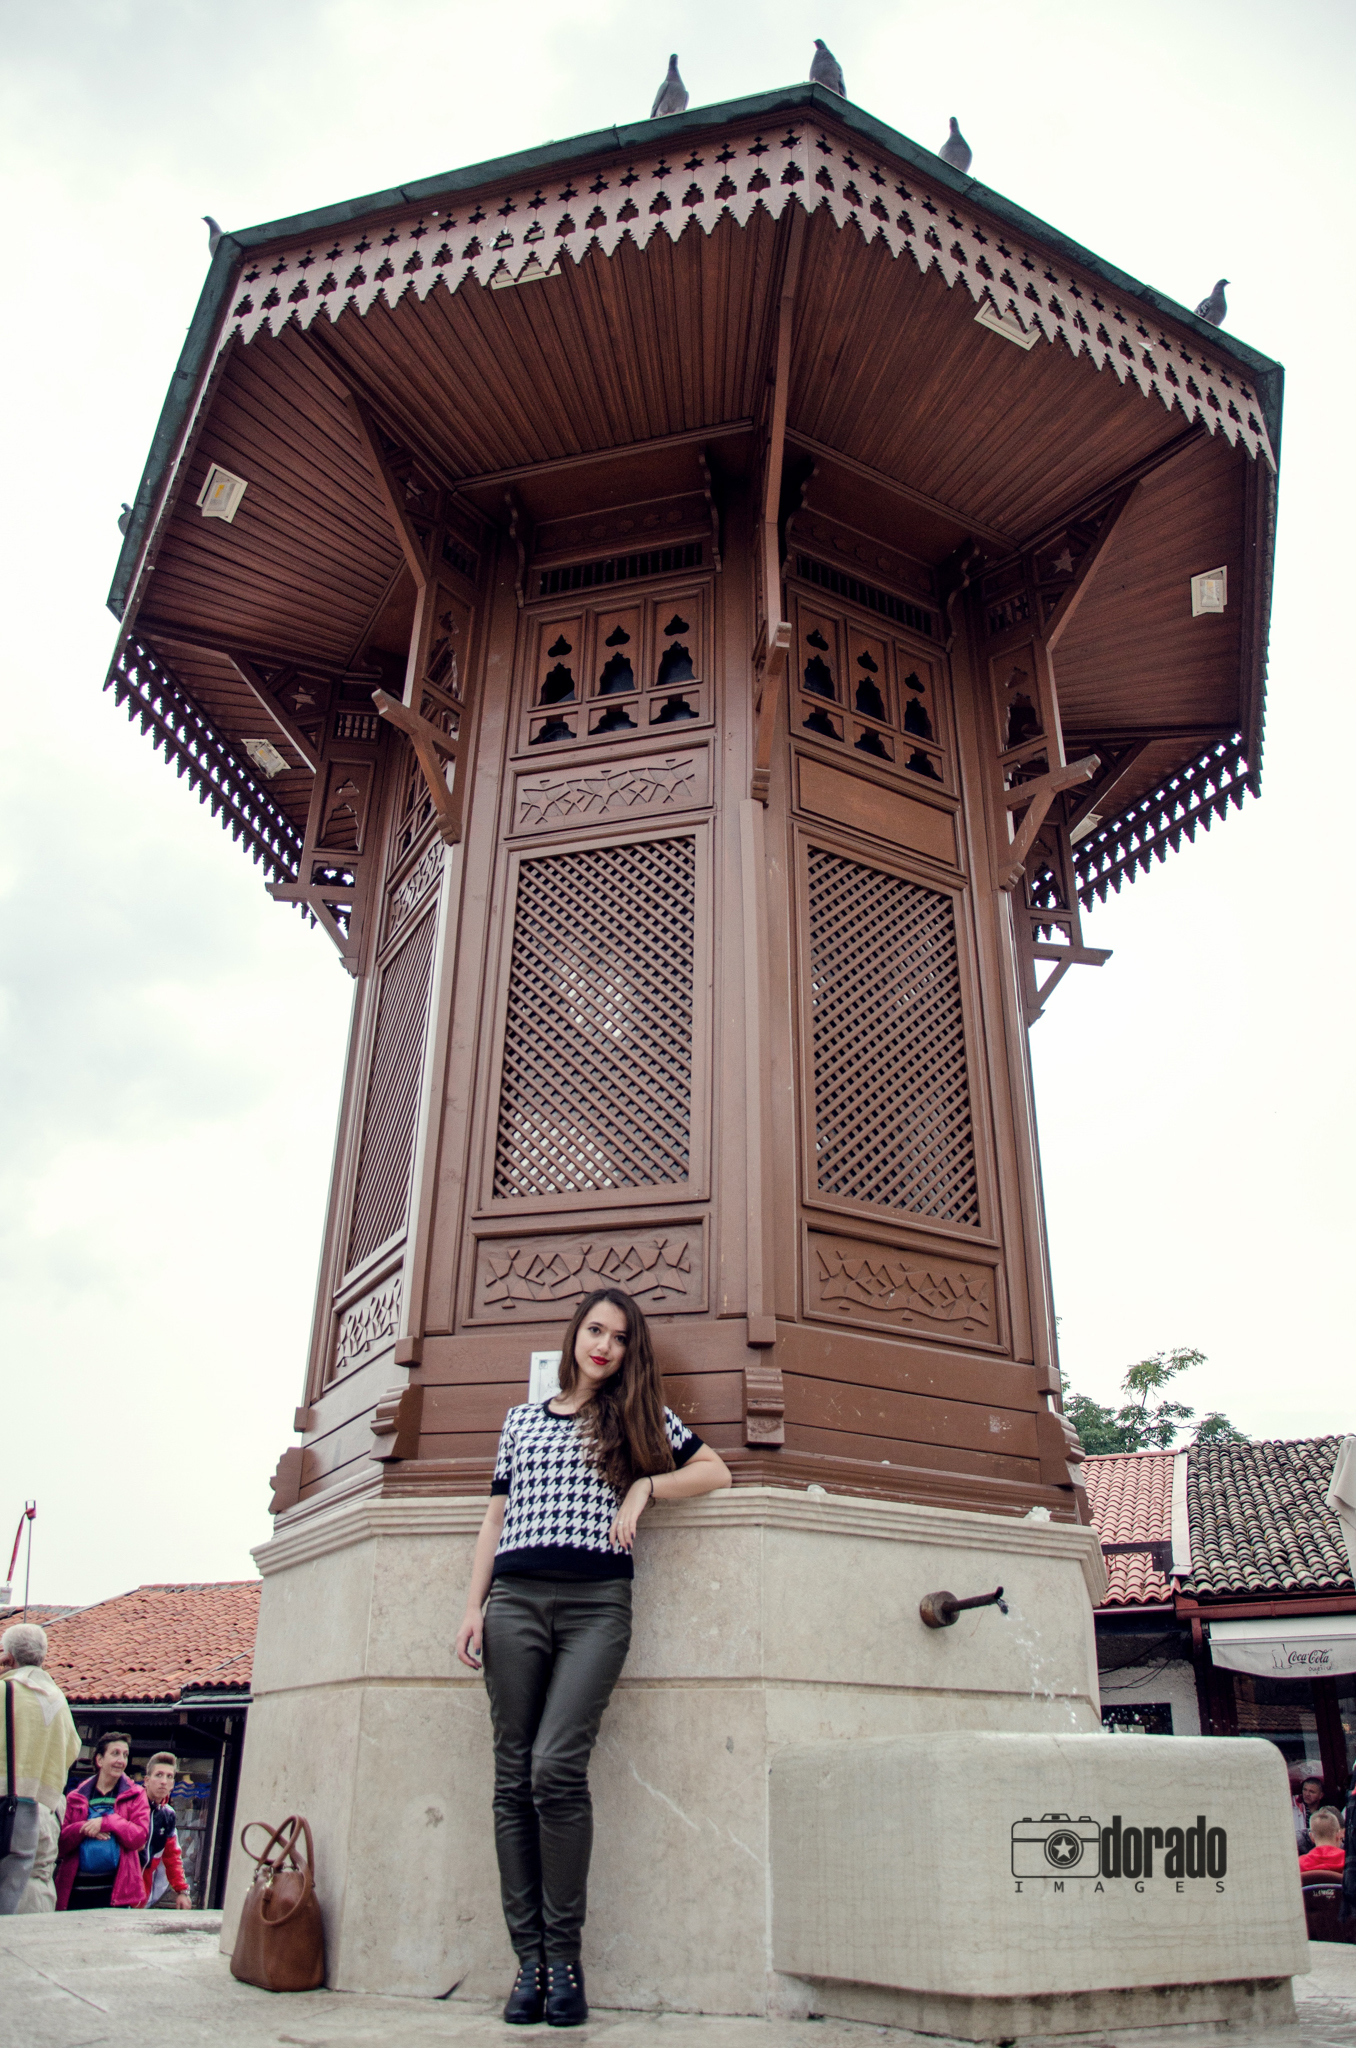 Photo walk in Sarajevo. @Dorado images.